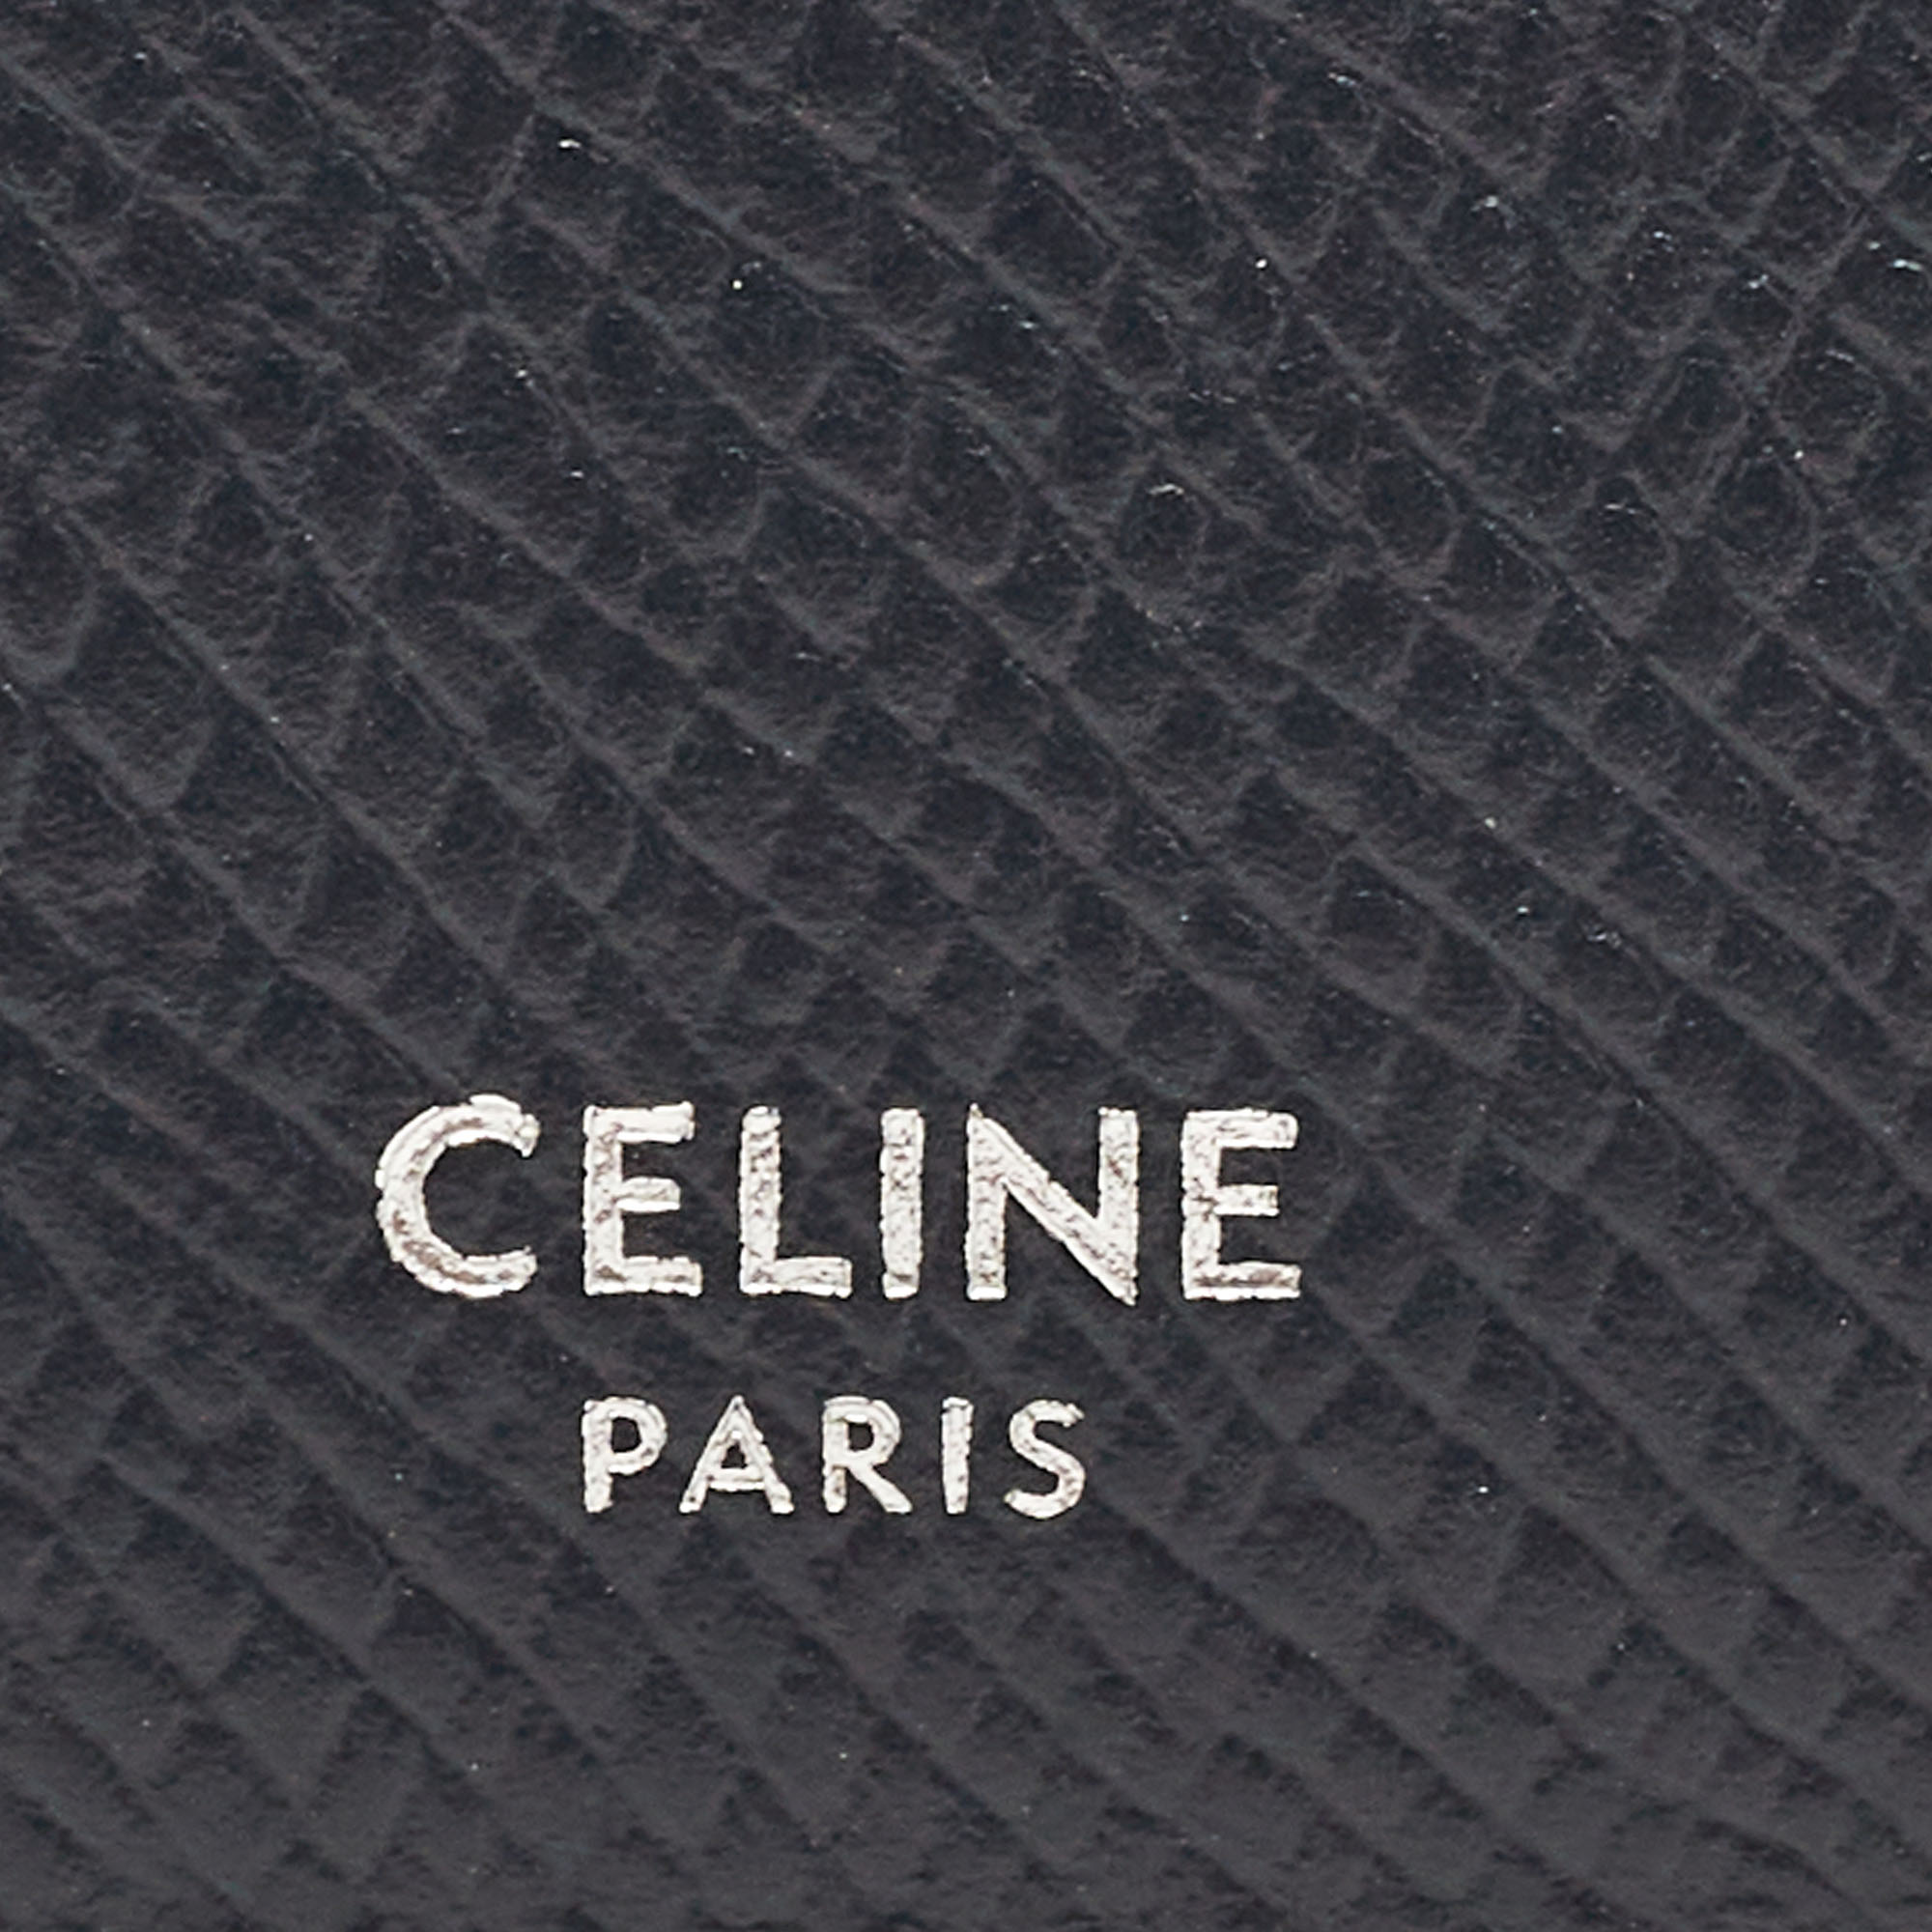 Celine Dark Blue Leather Zip Card Holder